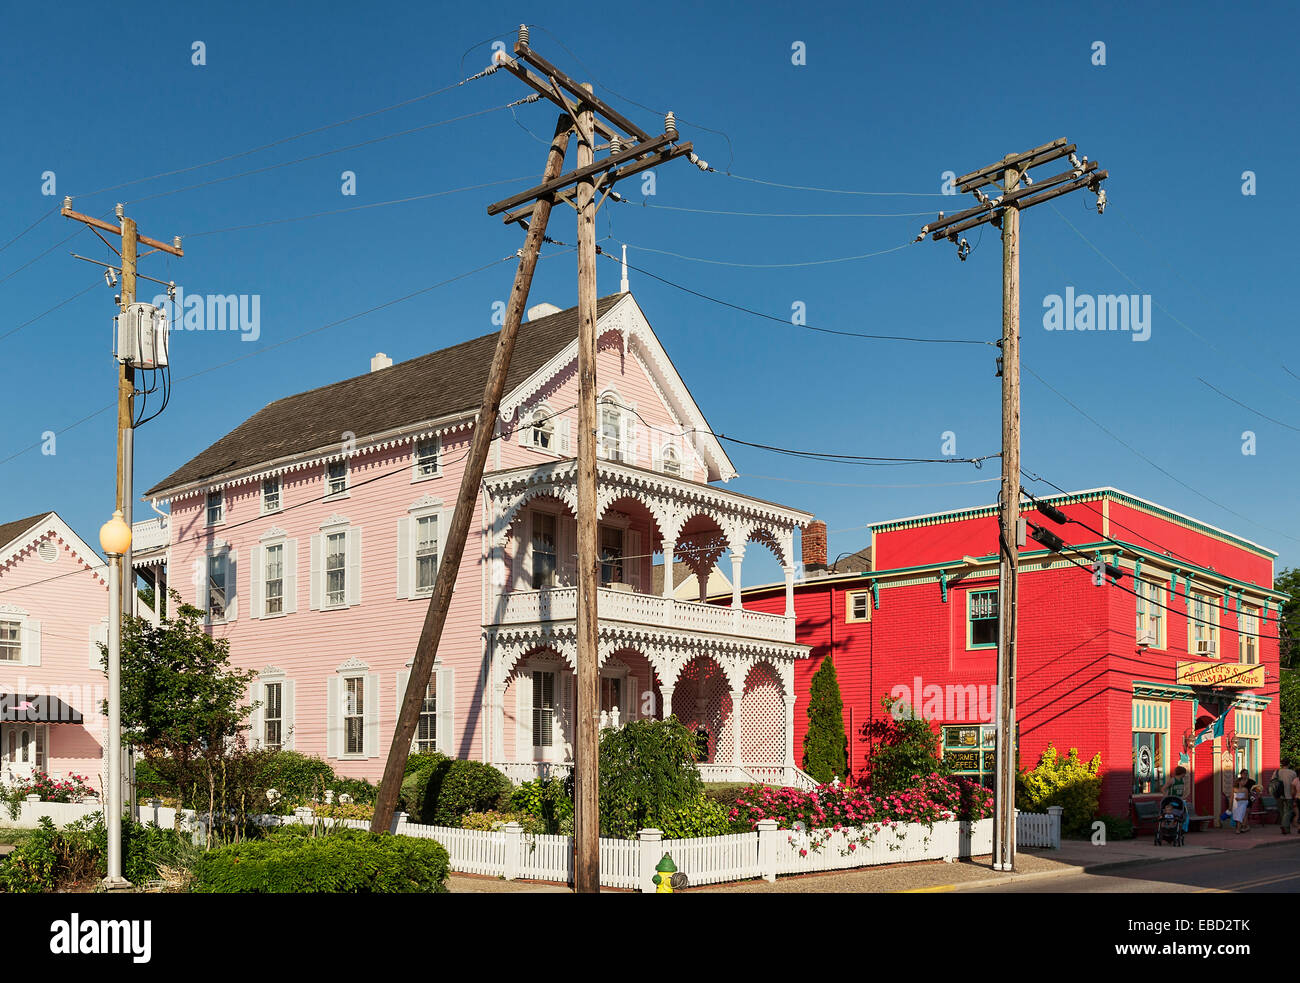 Viktorianisches Haus, Cape May, New Jersey, USA Stockfoto